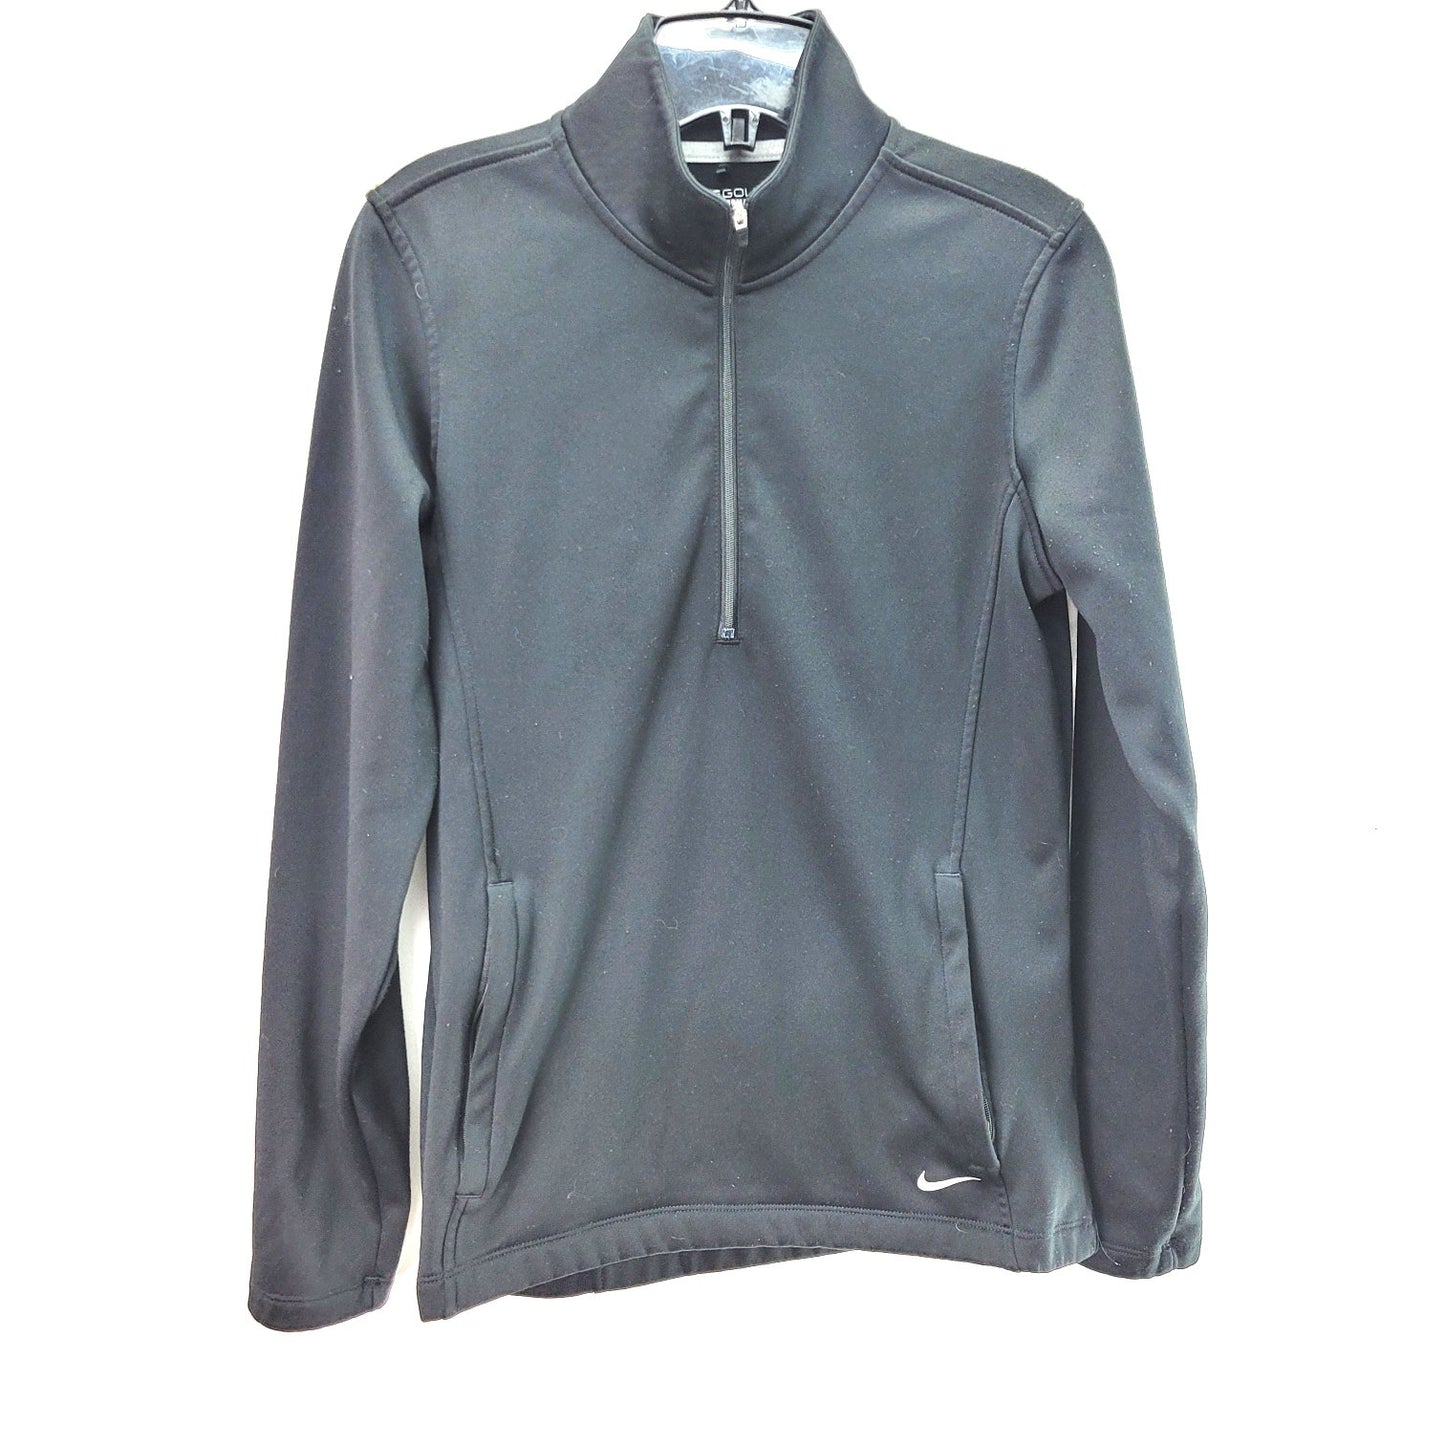 Nike Golf Men's Half-Zip Long Sleeve Shirt Black - Size Medium